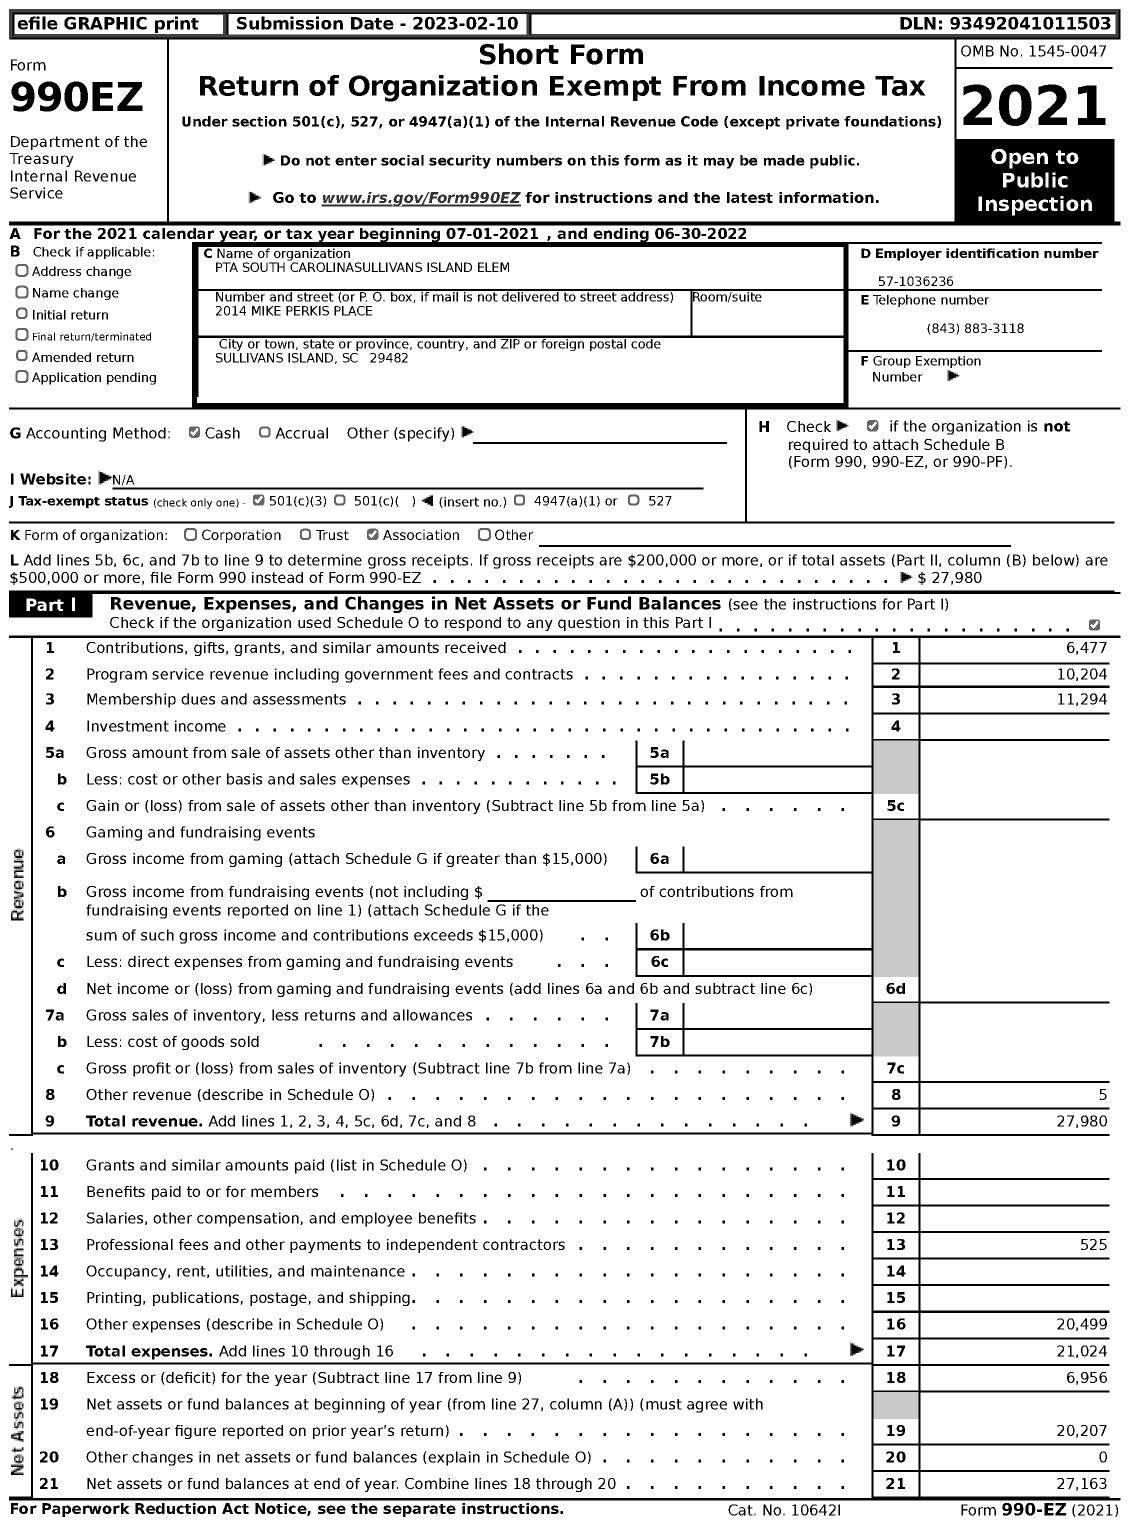 Image of first page of 2021 Form 990EZ for PTA South CarolinaSullivans Island Elem